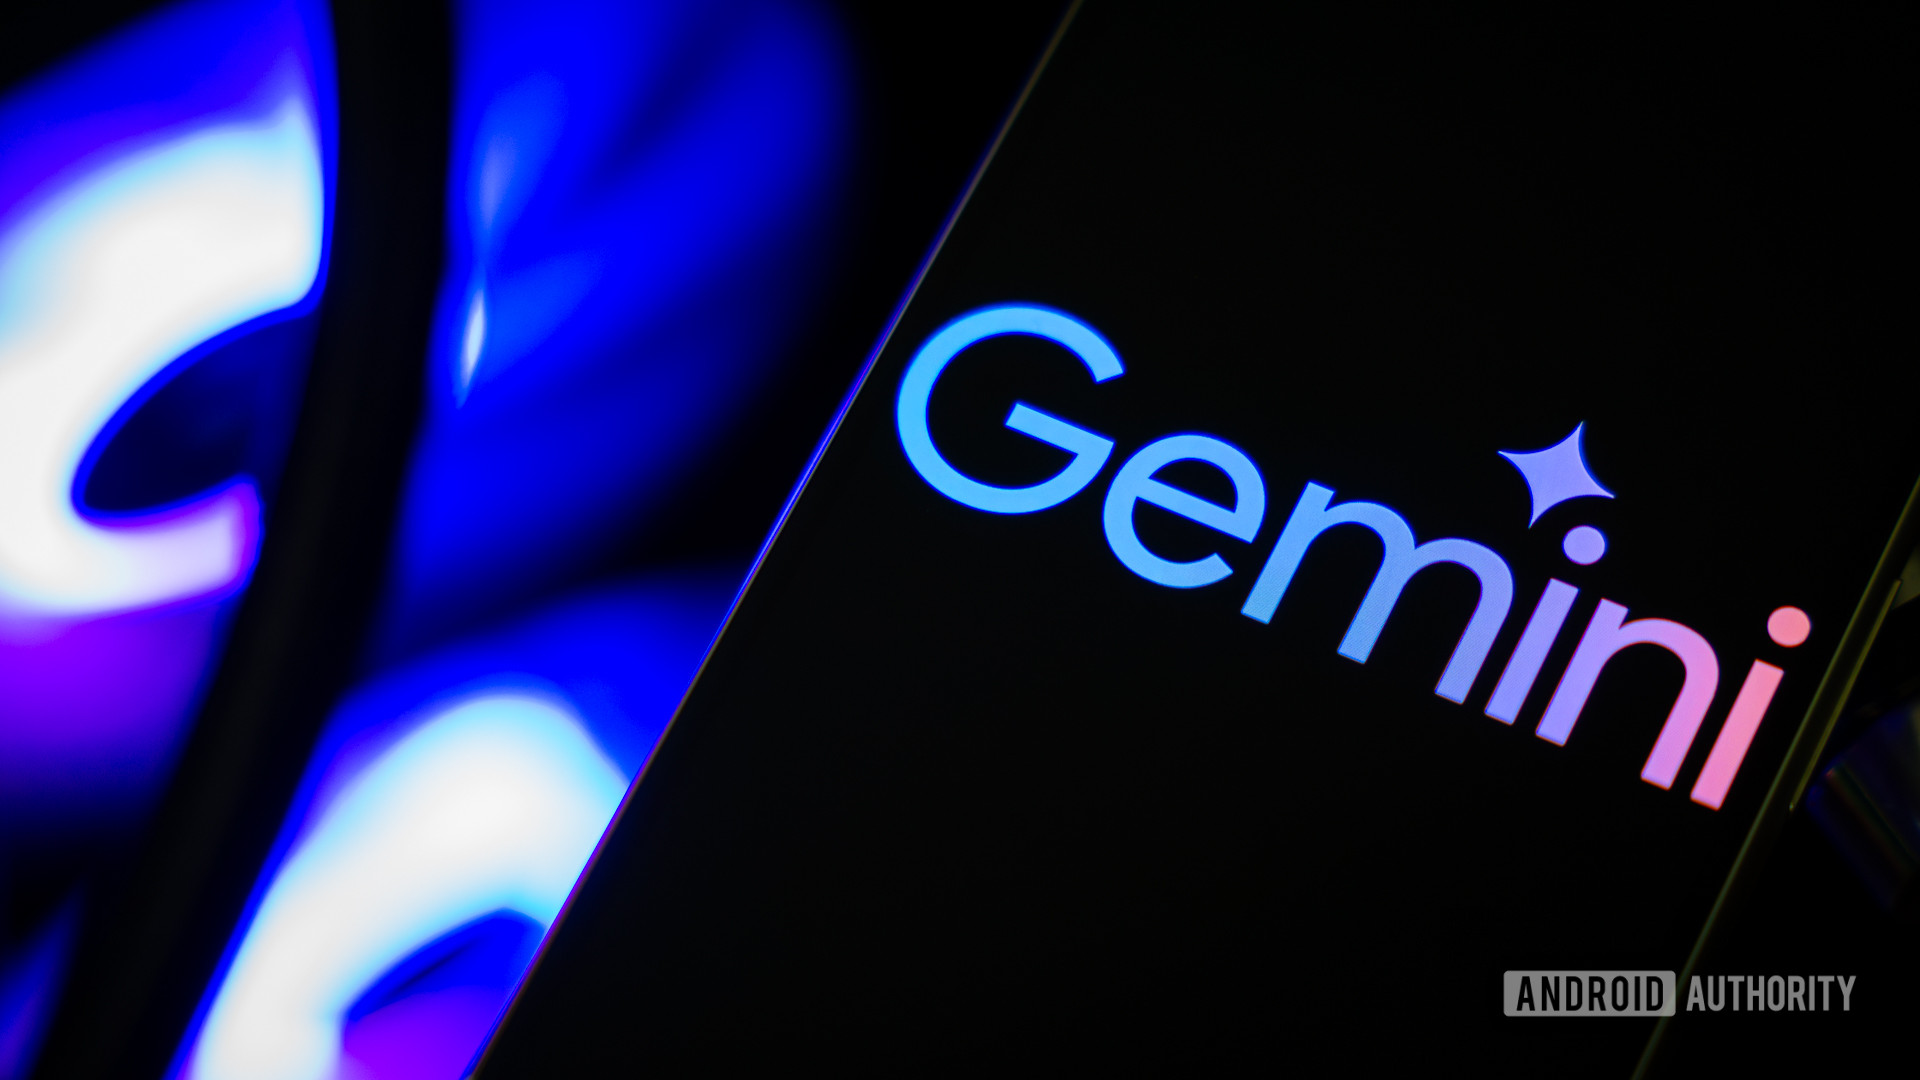 Google Gemini logo on smartphone stock photo (1)